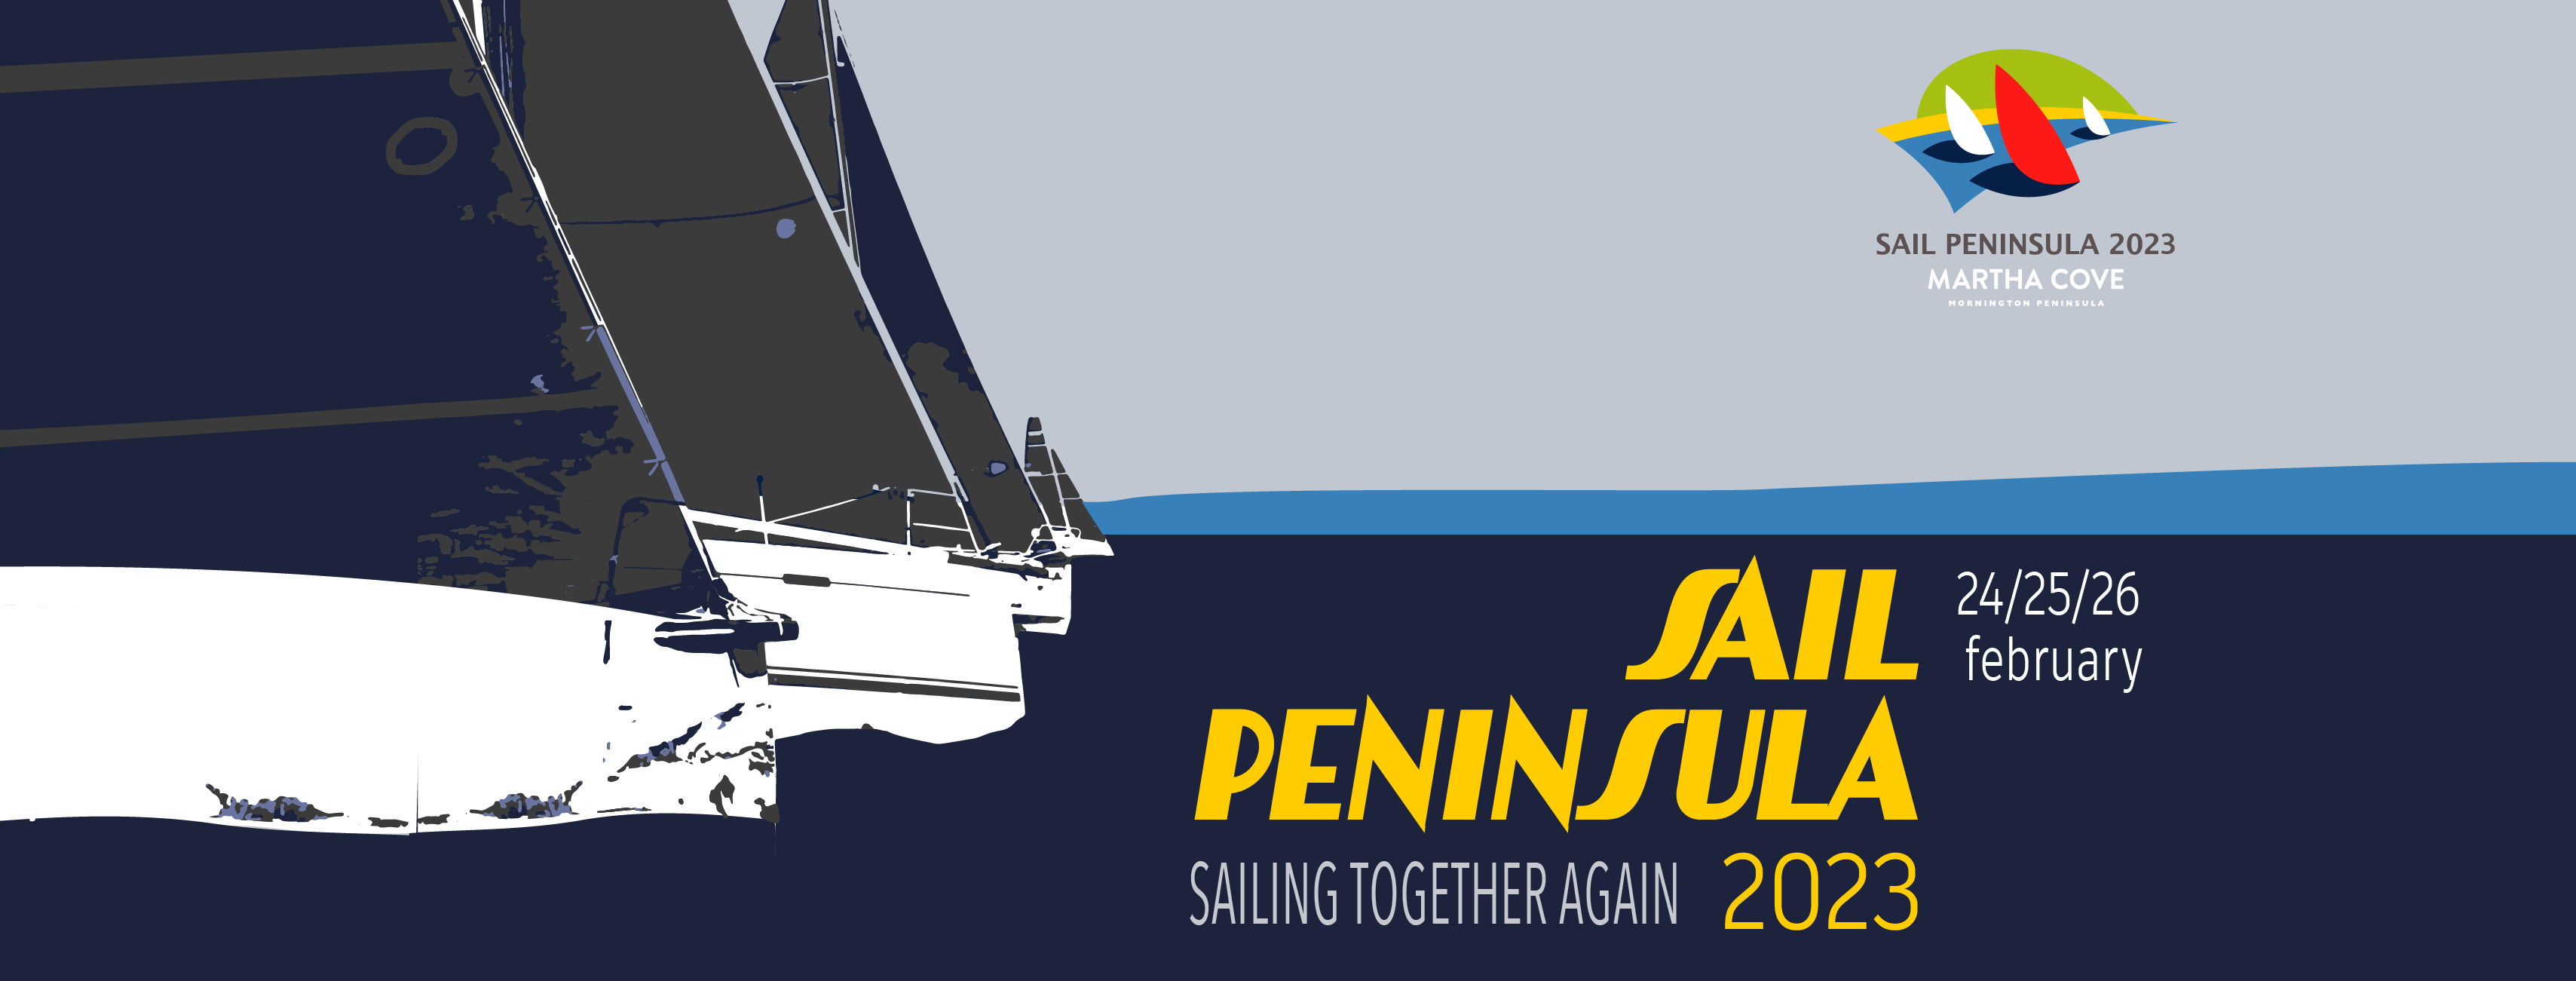 2023 sail peninsula regatta